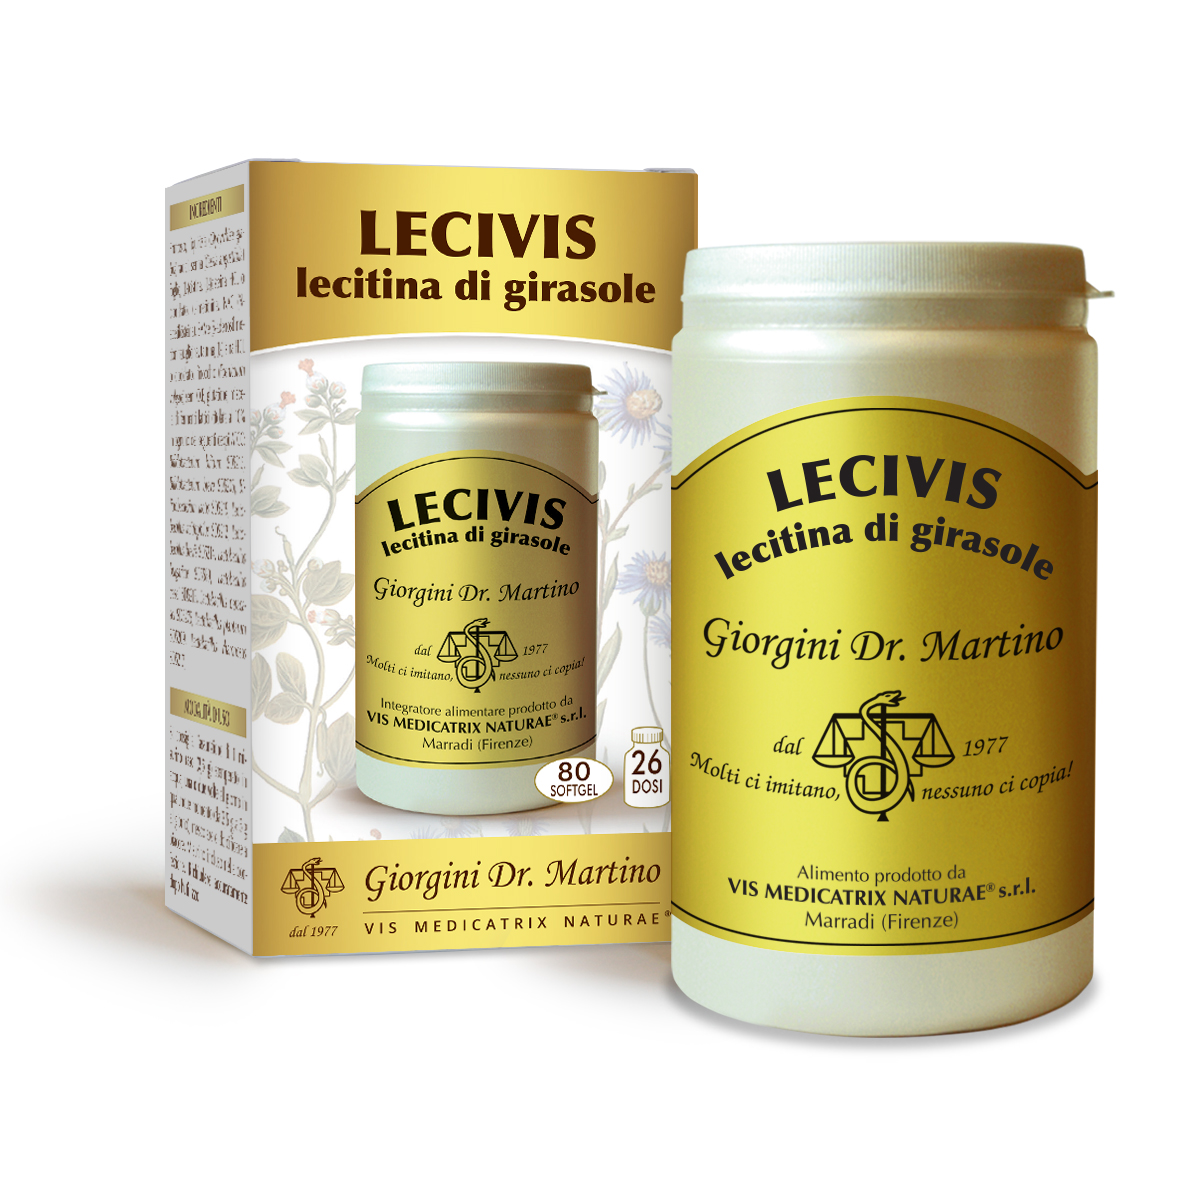 LECIVIS 100 g - 80 softgel da 1250 mg